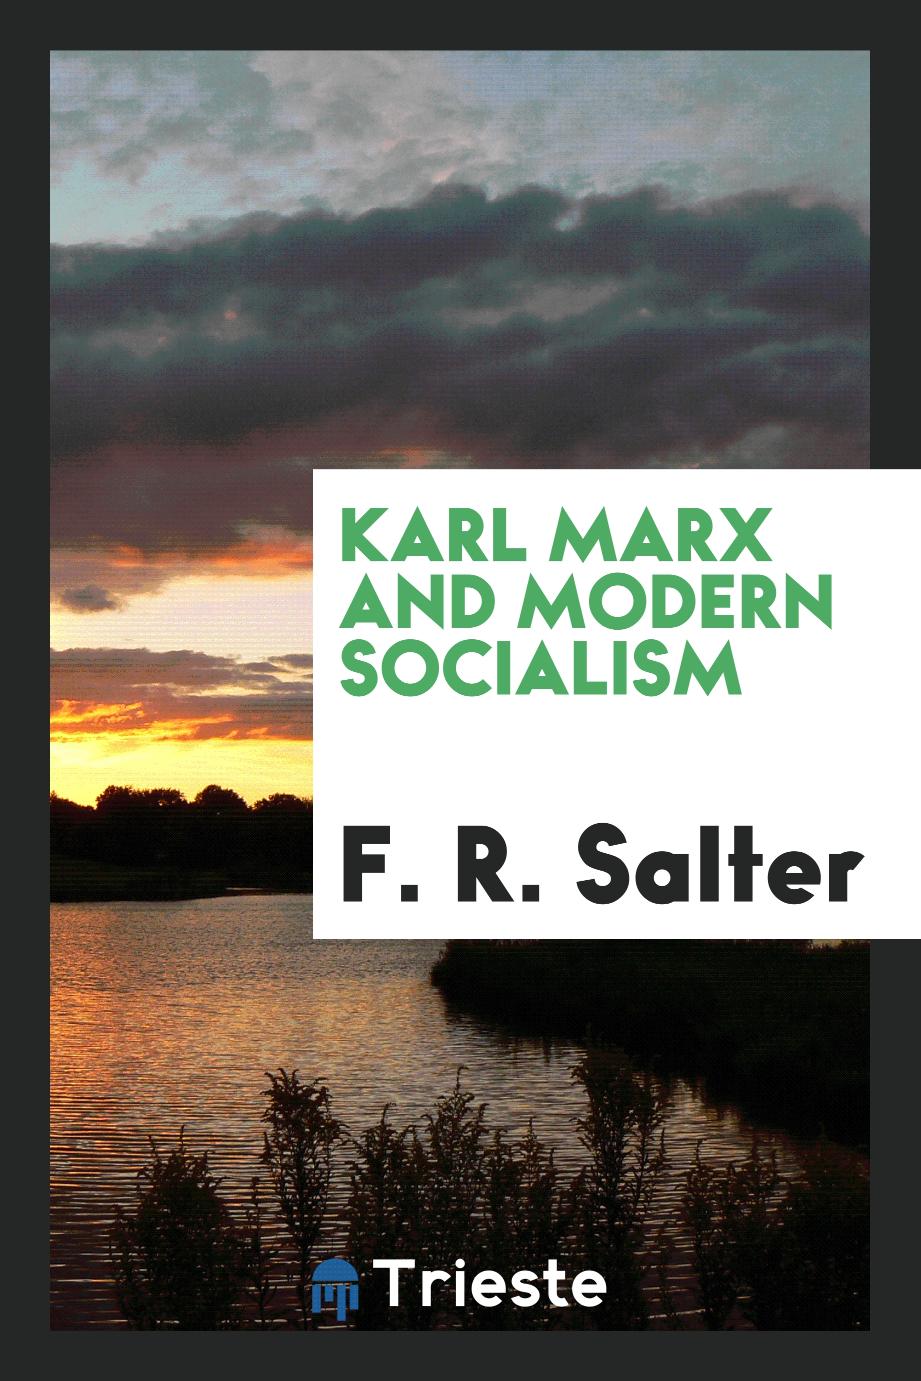 Karl Marx and modern socialism